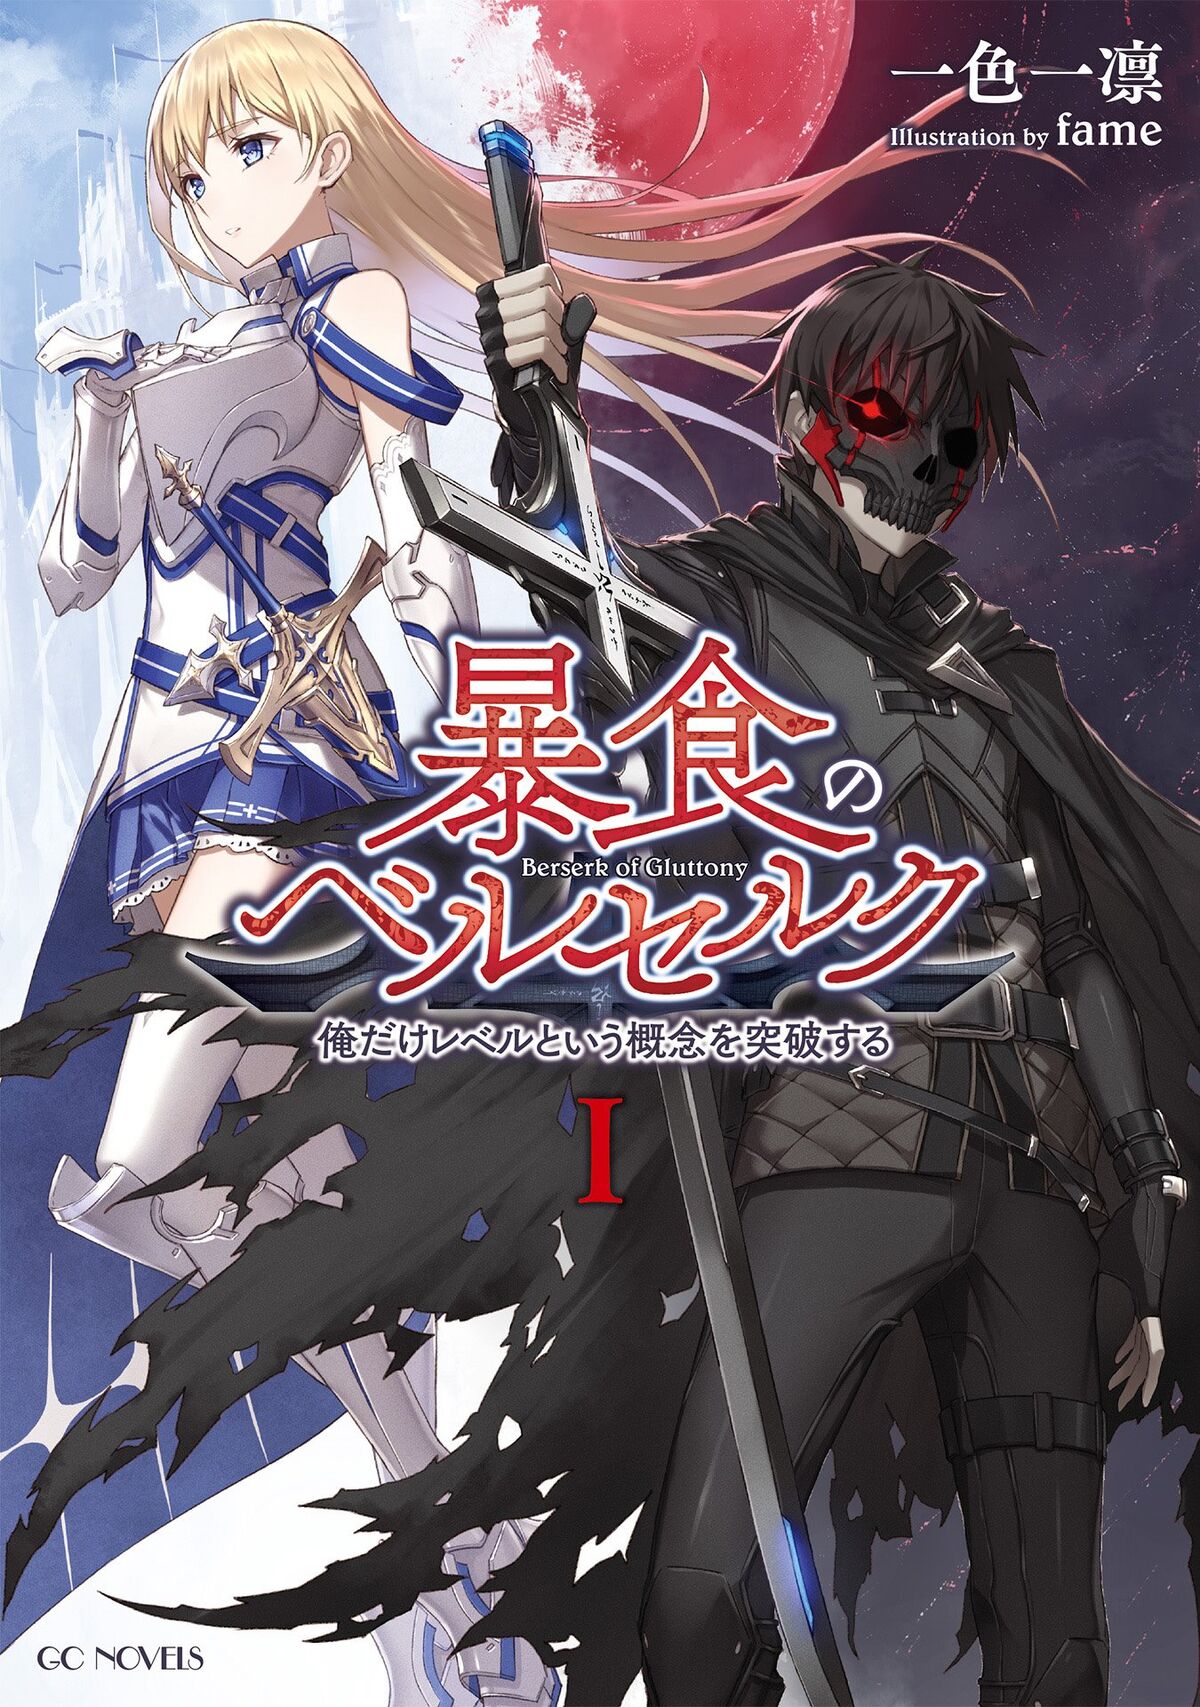 ‘Berserk of Gluttony’ Dark Fantasy Novel to Receive New Anime